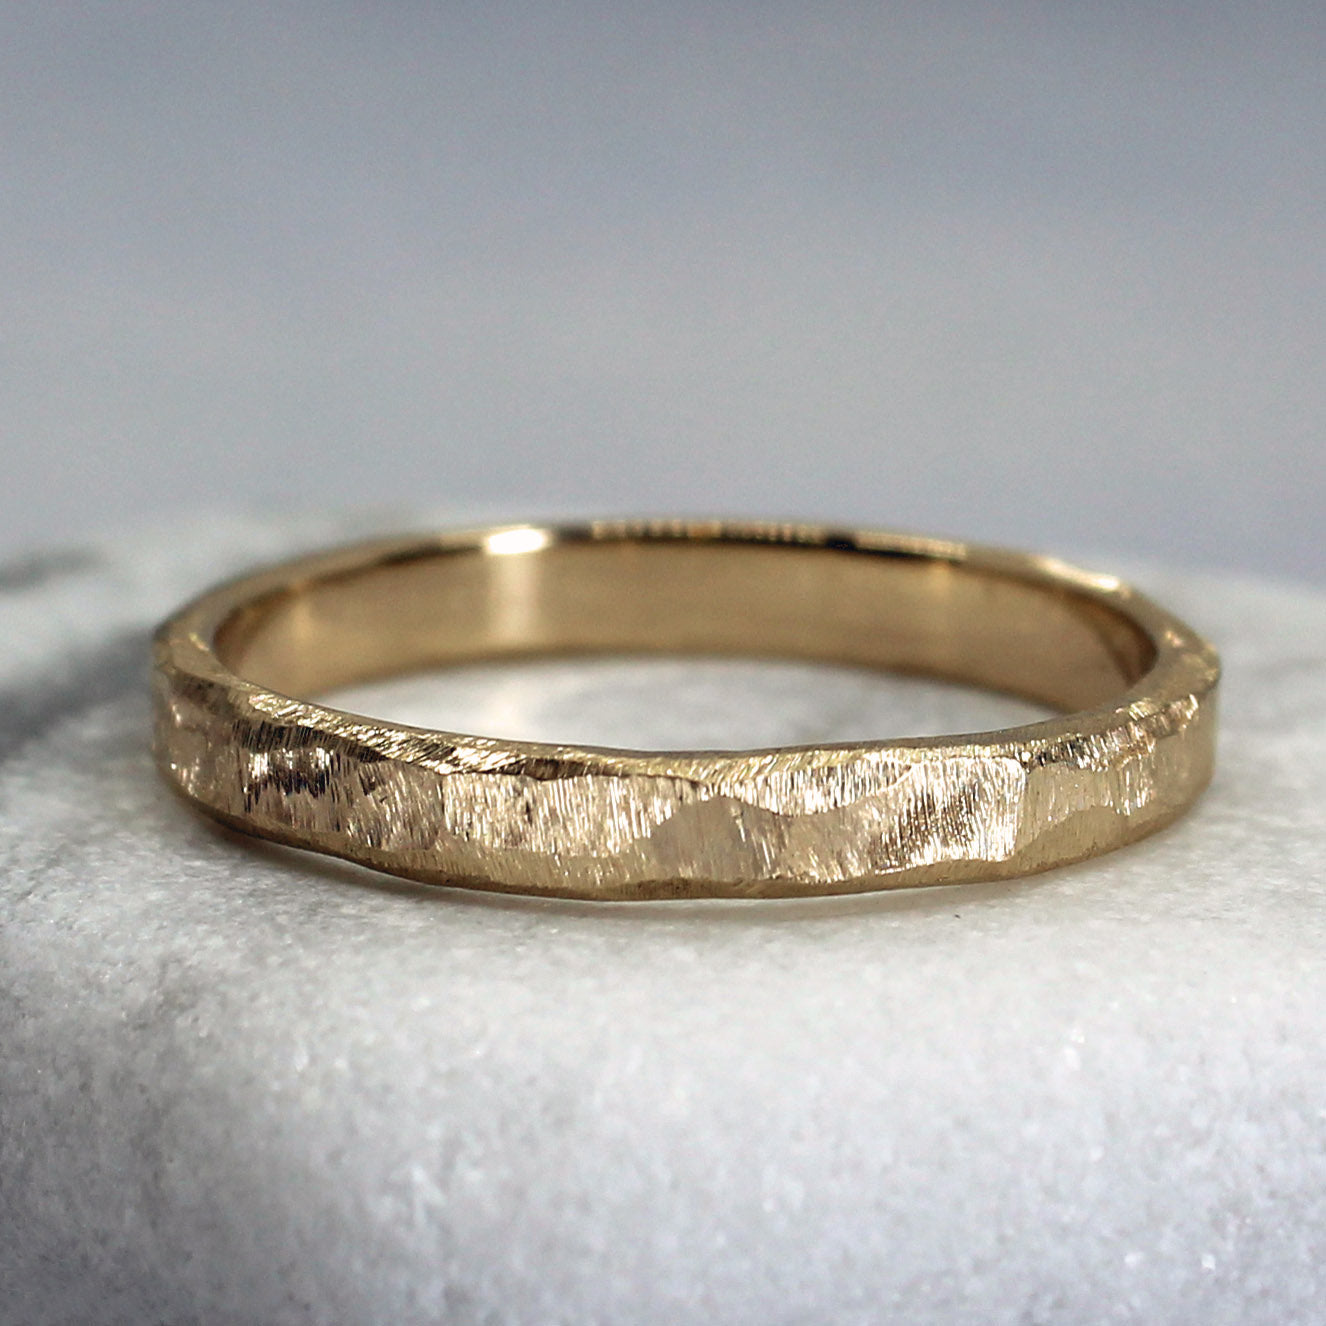 Rustic gold wedding ring